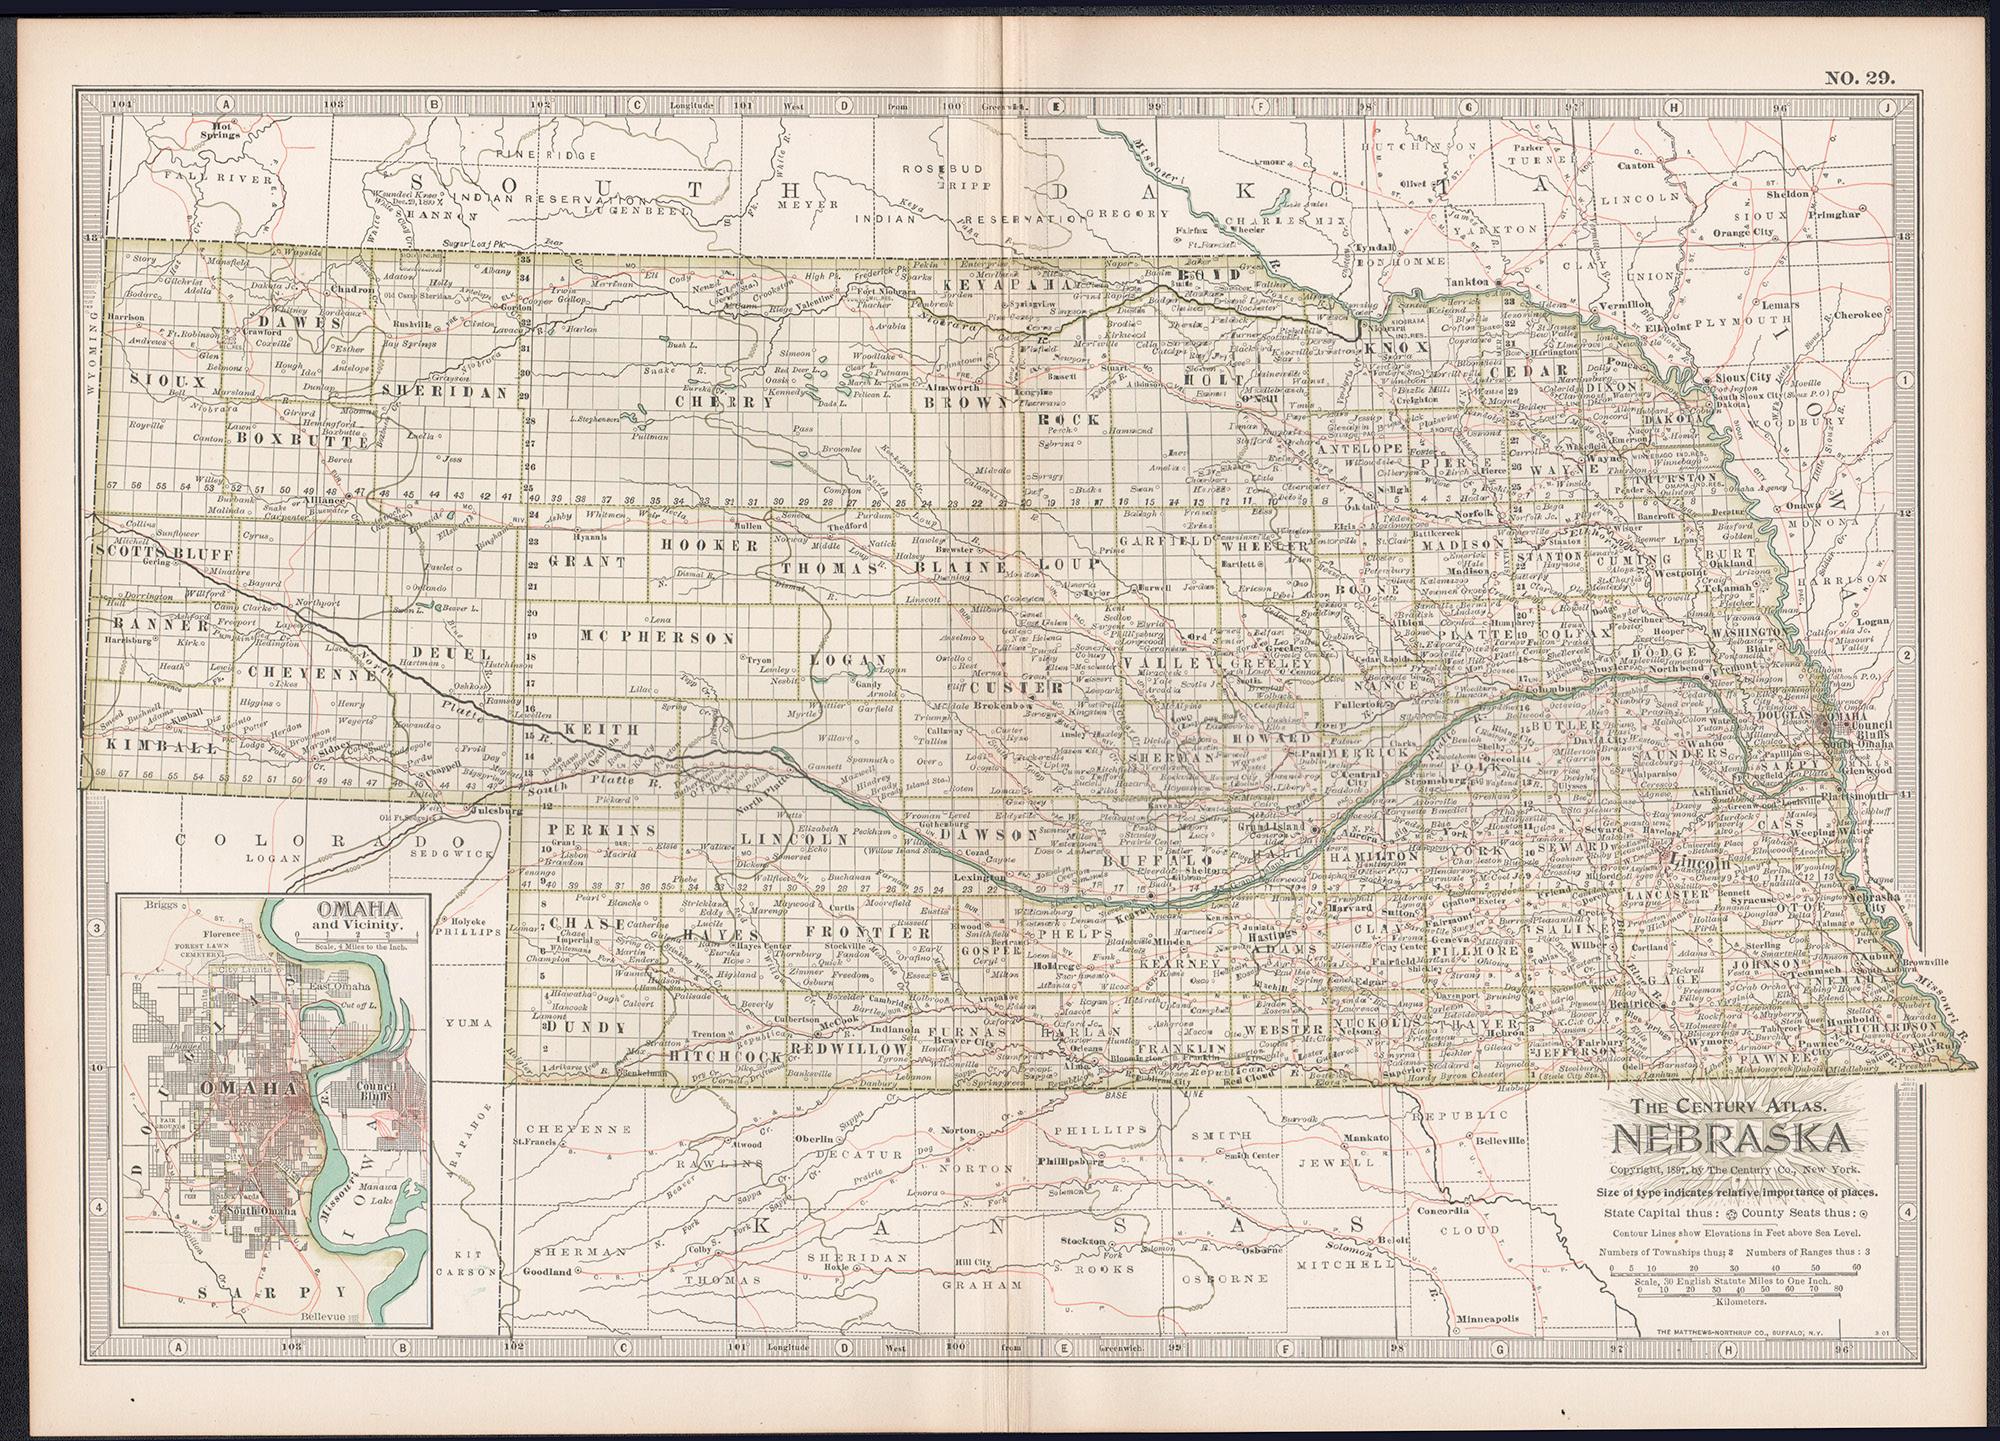 Nebraska. USA. Century Atlas state antique vintage map - Print by Unknown